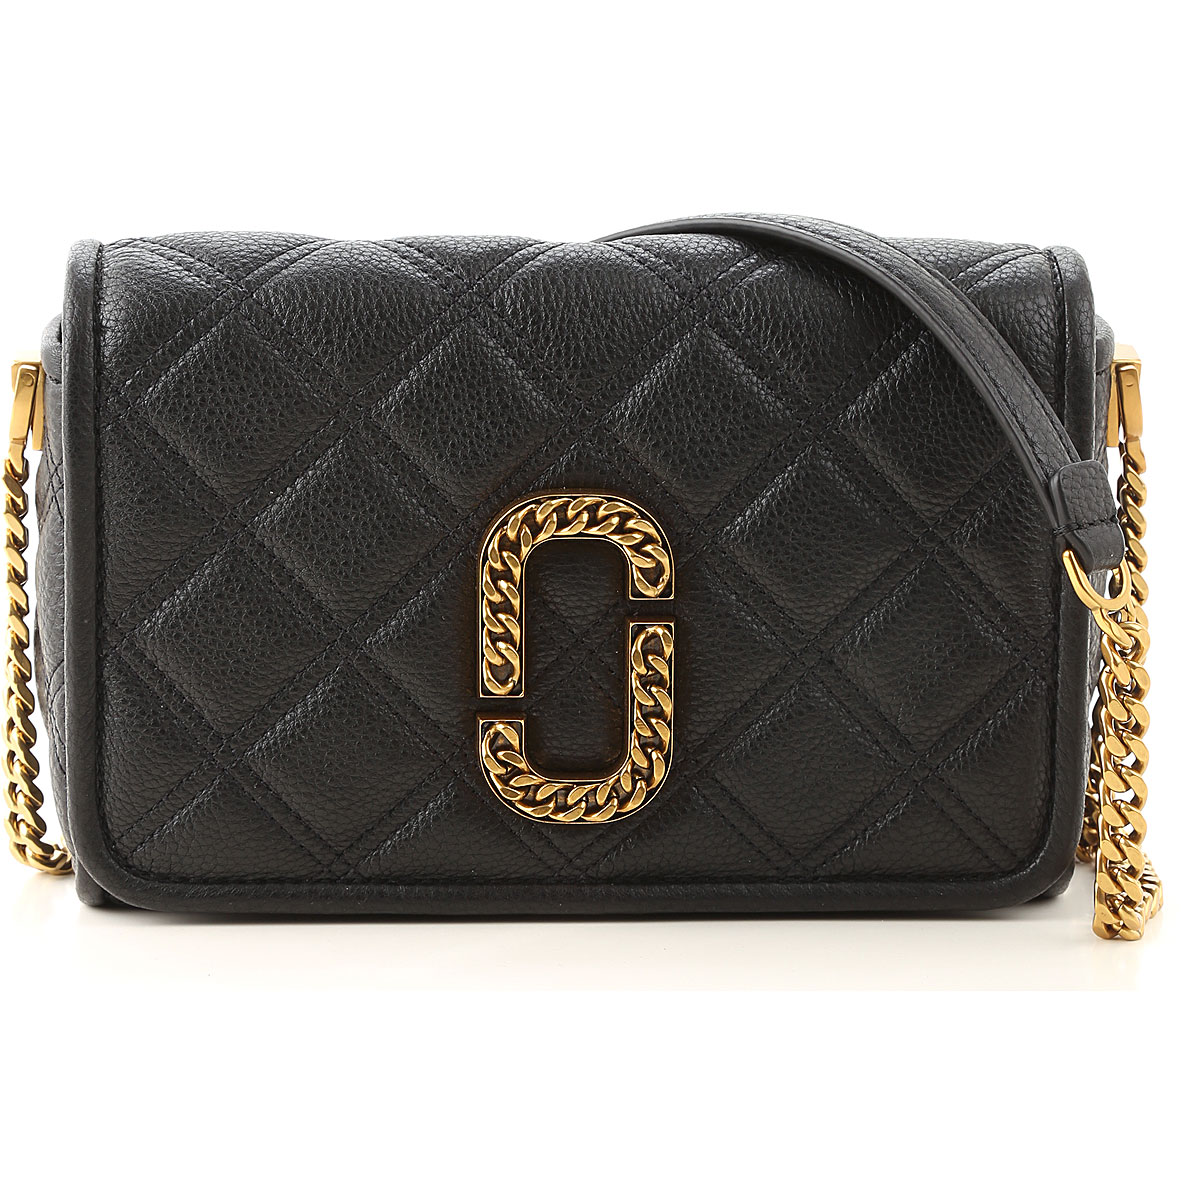 Handbags Marc Jacobs, Style code: m0015816-001-